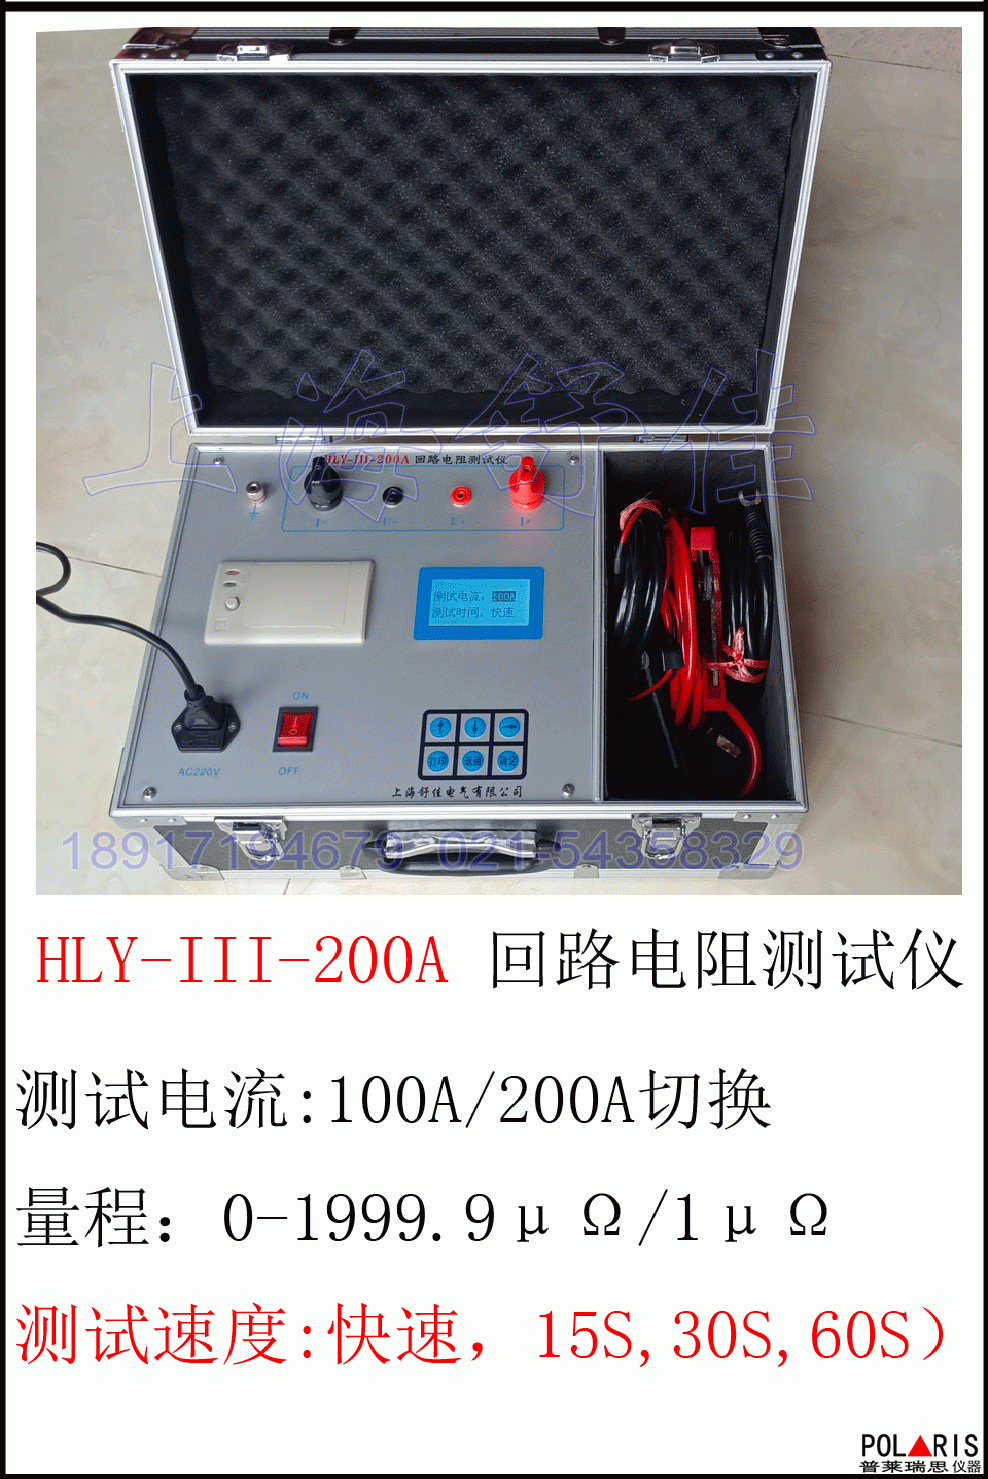 HLY-III-200A智能型回路电阻测试仪